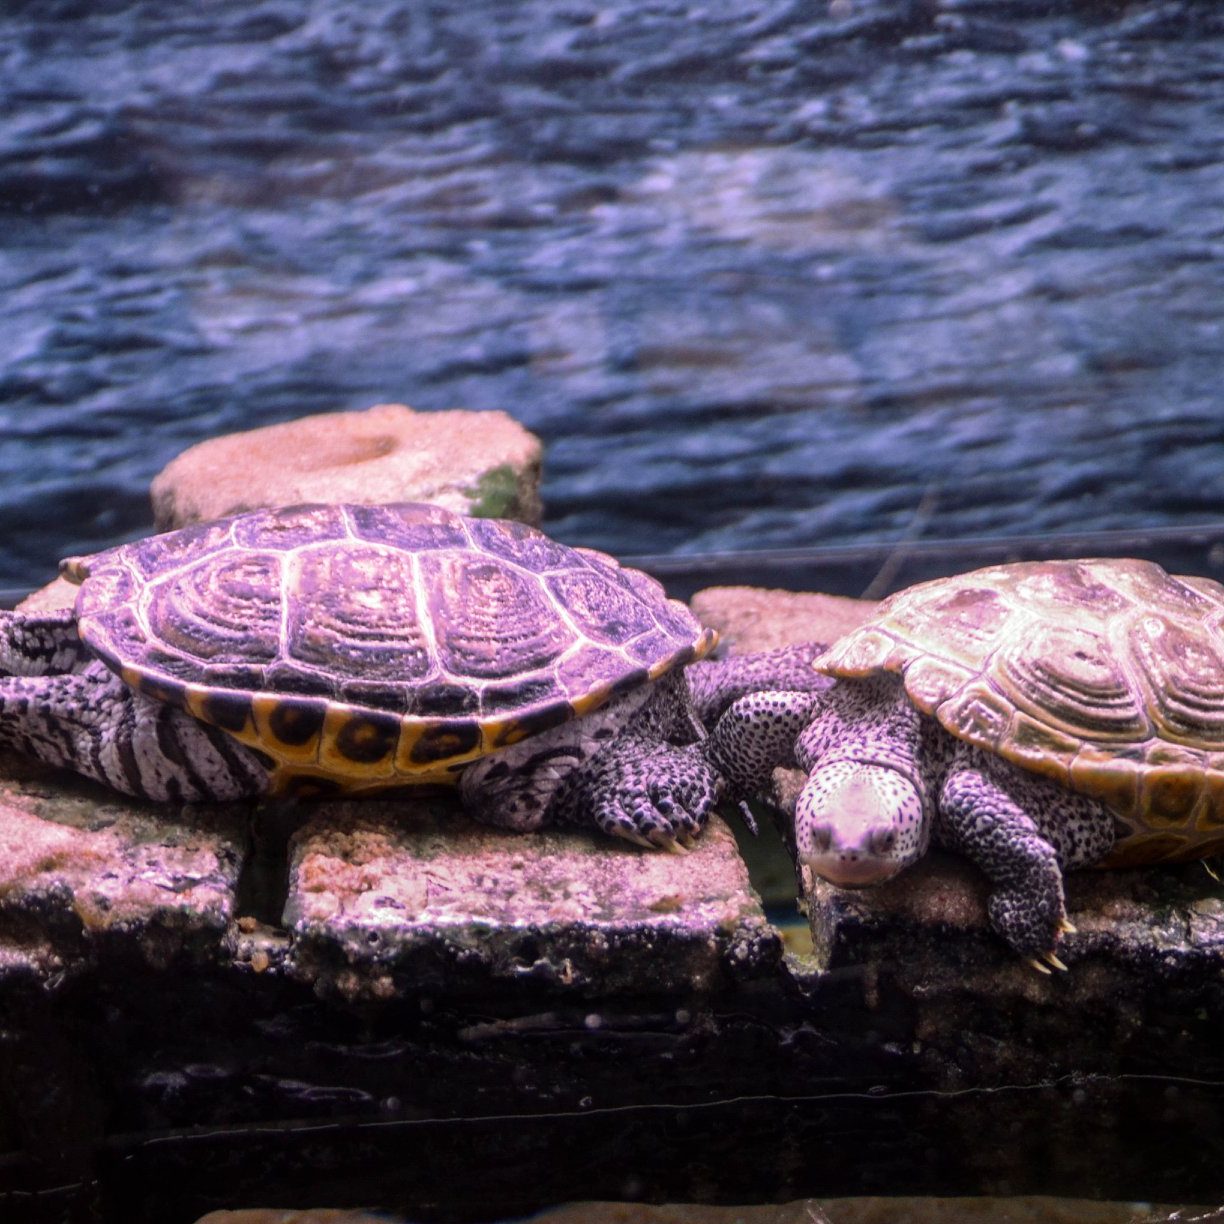 jenkinsons-aquarium-two-turtles